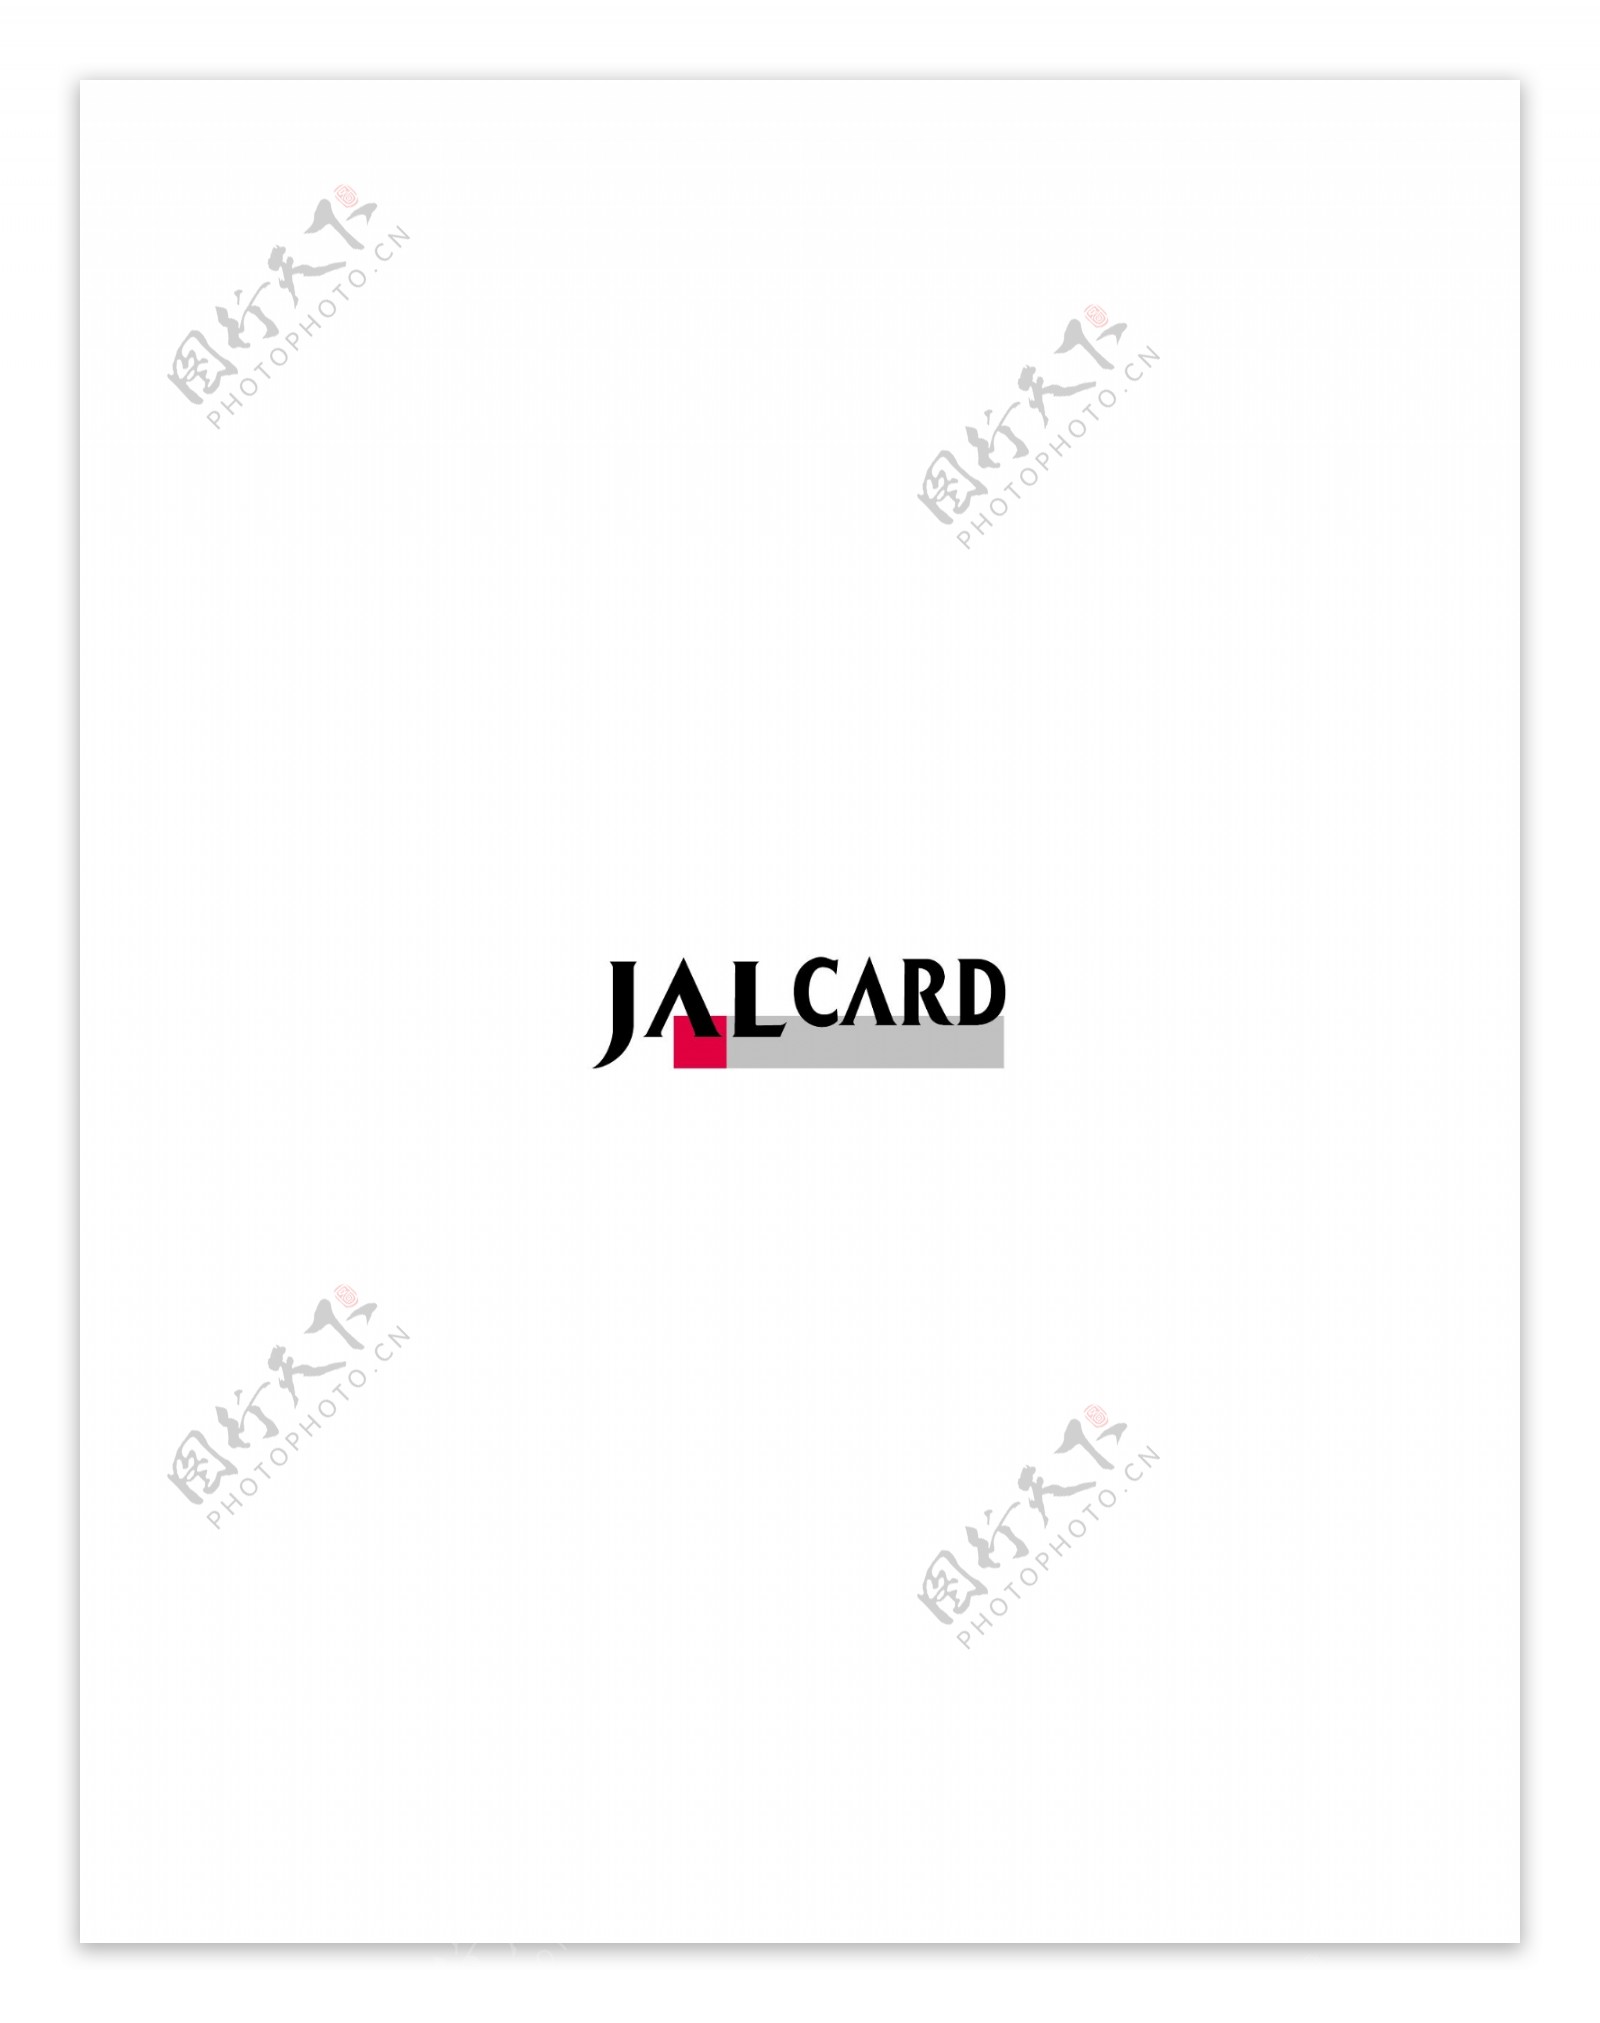 JALCardlogo设计欣赏JALCard民航业标志下载标志设计欣赏